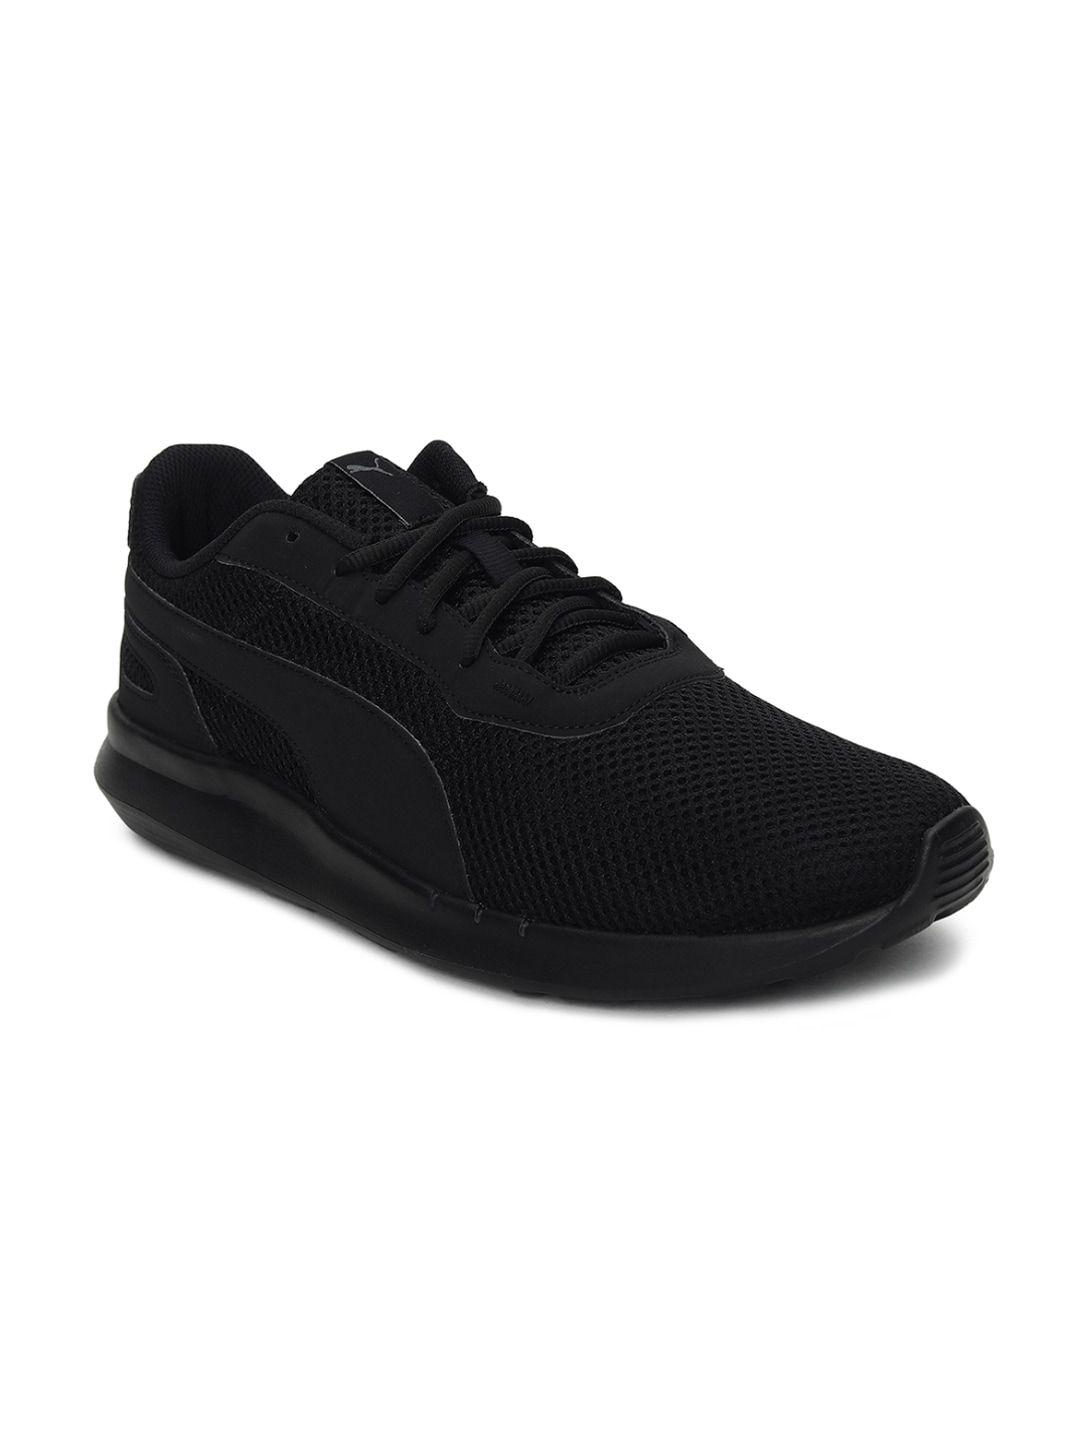 puma unisex black solid sneakers